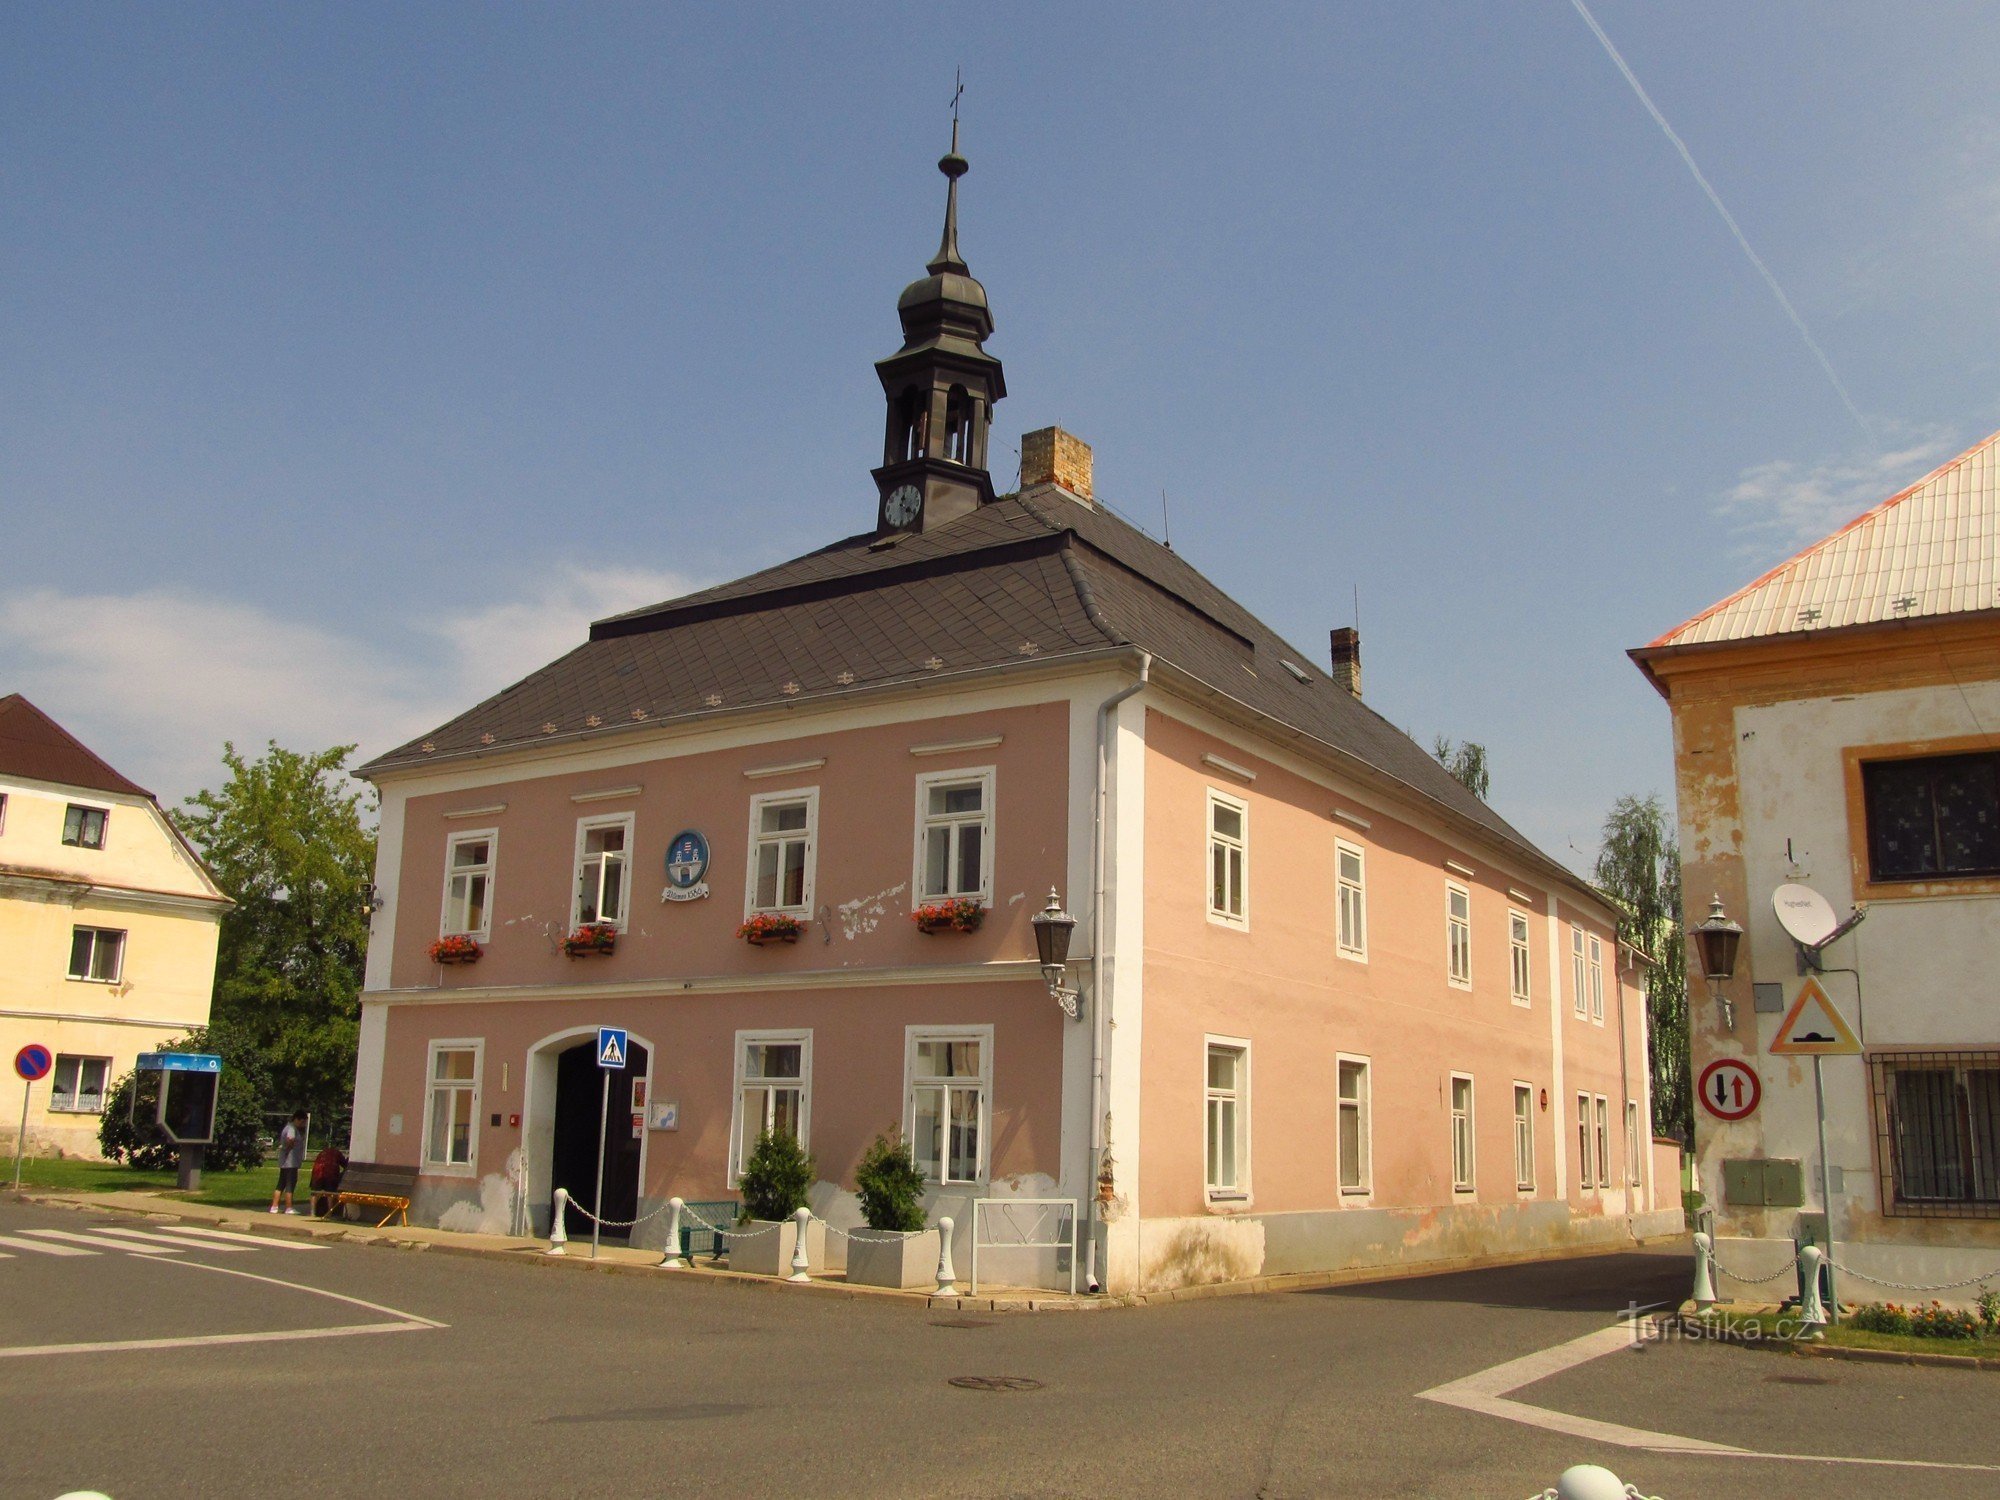 Вилемовская ратуша конца XVIII века с башенкой и гербом на фасаде.